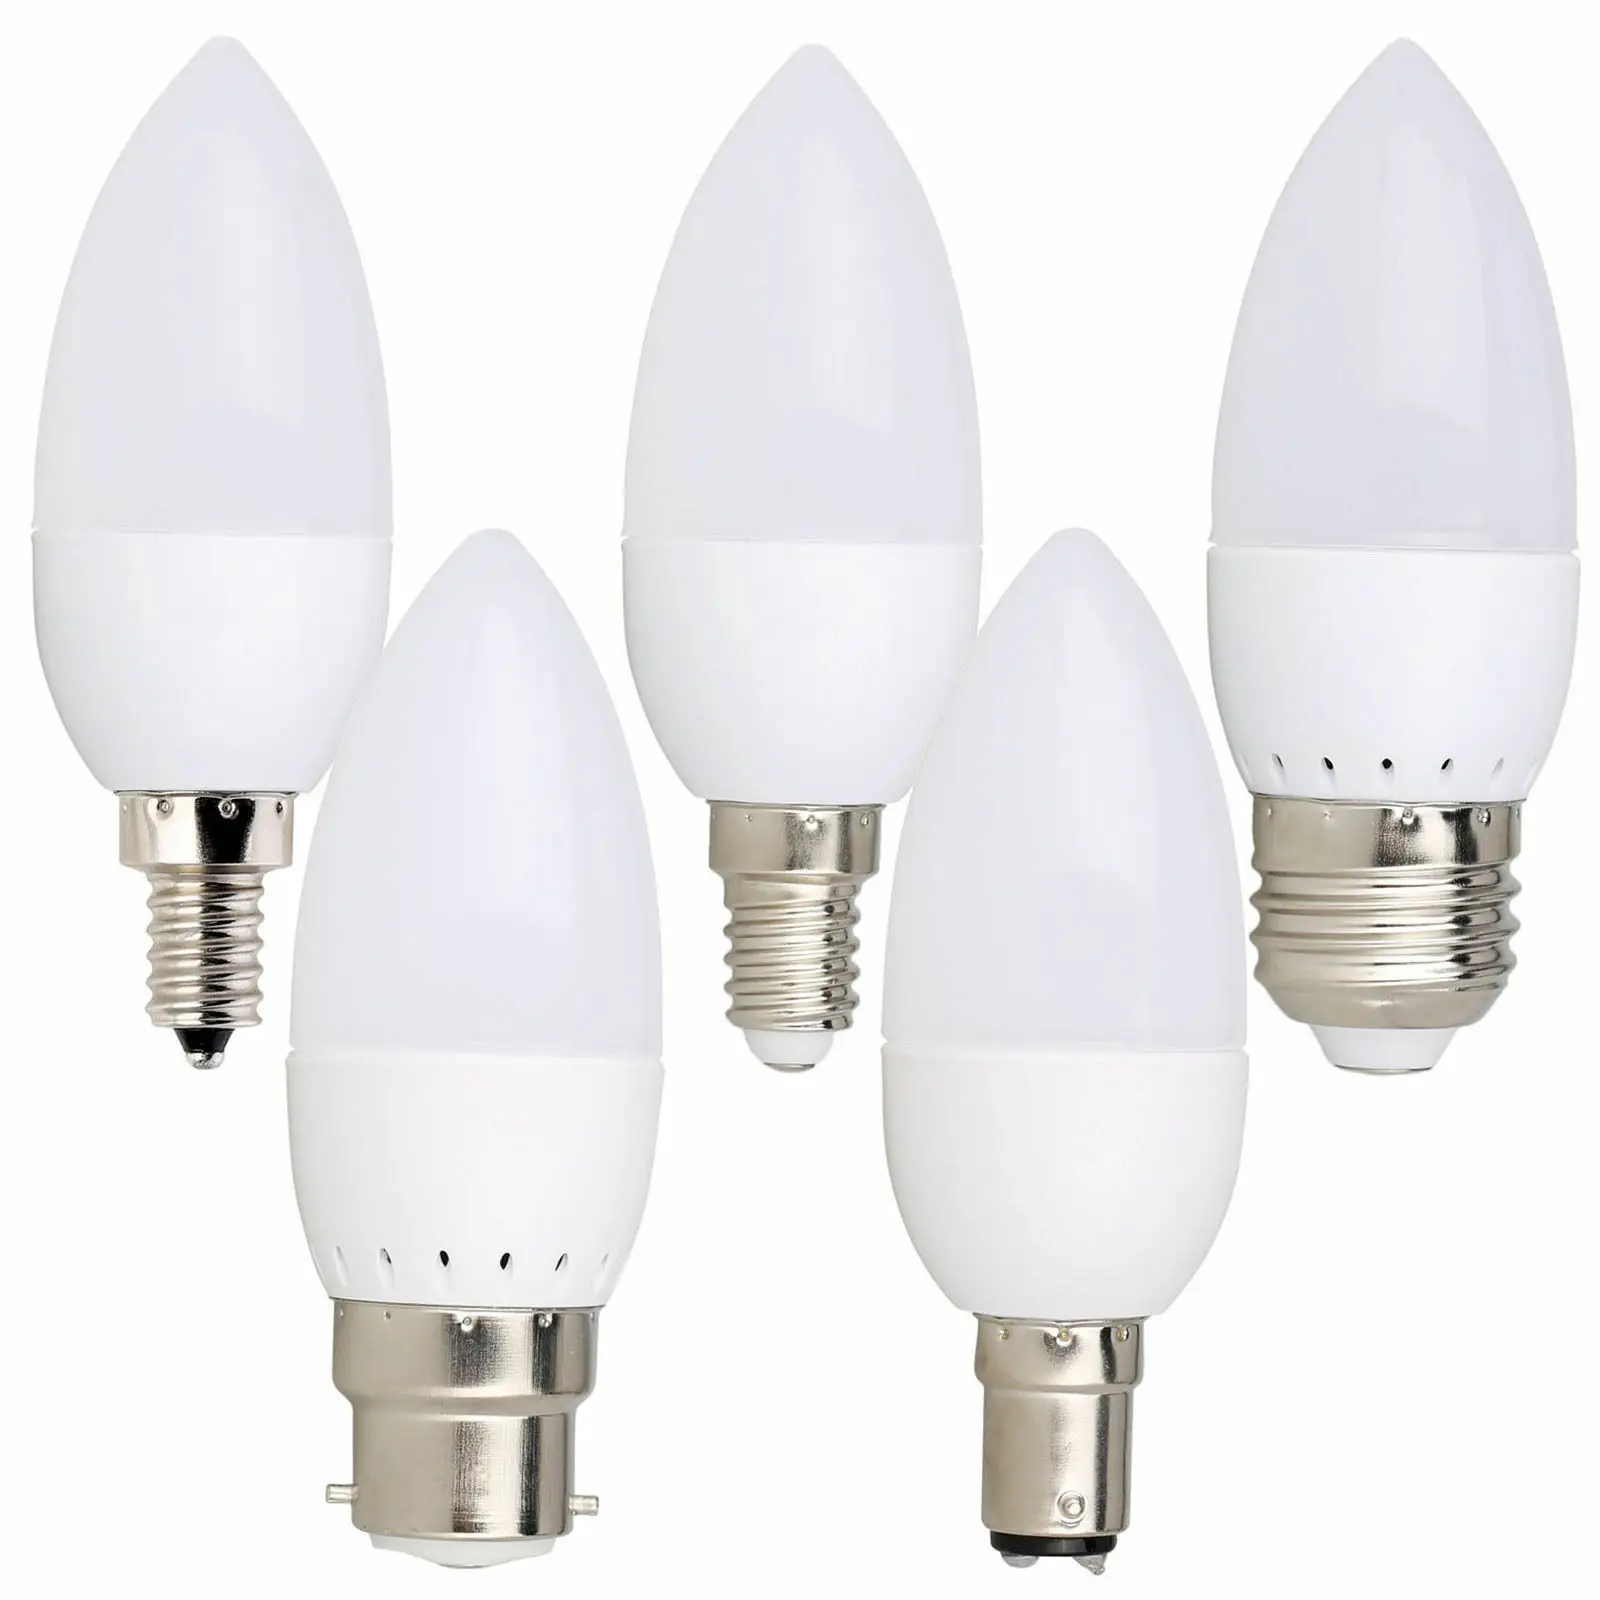 

E12 E14 E27 B22 LED Candle Light Bulb Flame Tip Screw 85-265V 3W Chandelier Lamp 2835 SMD Cool Warm White Energy Saving for Home